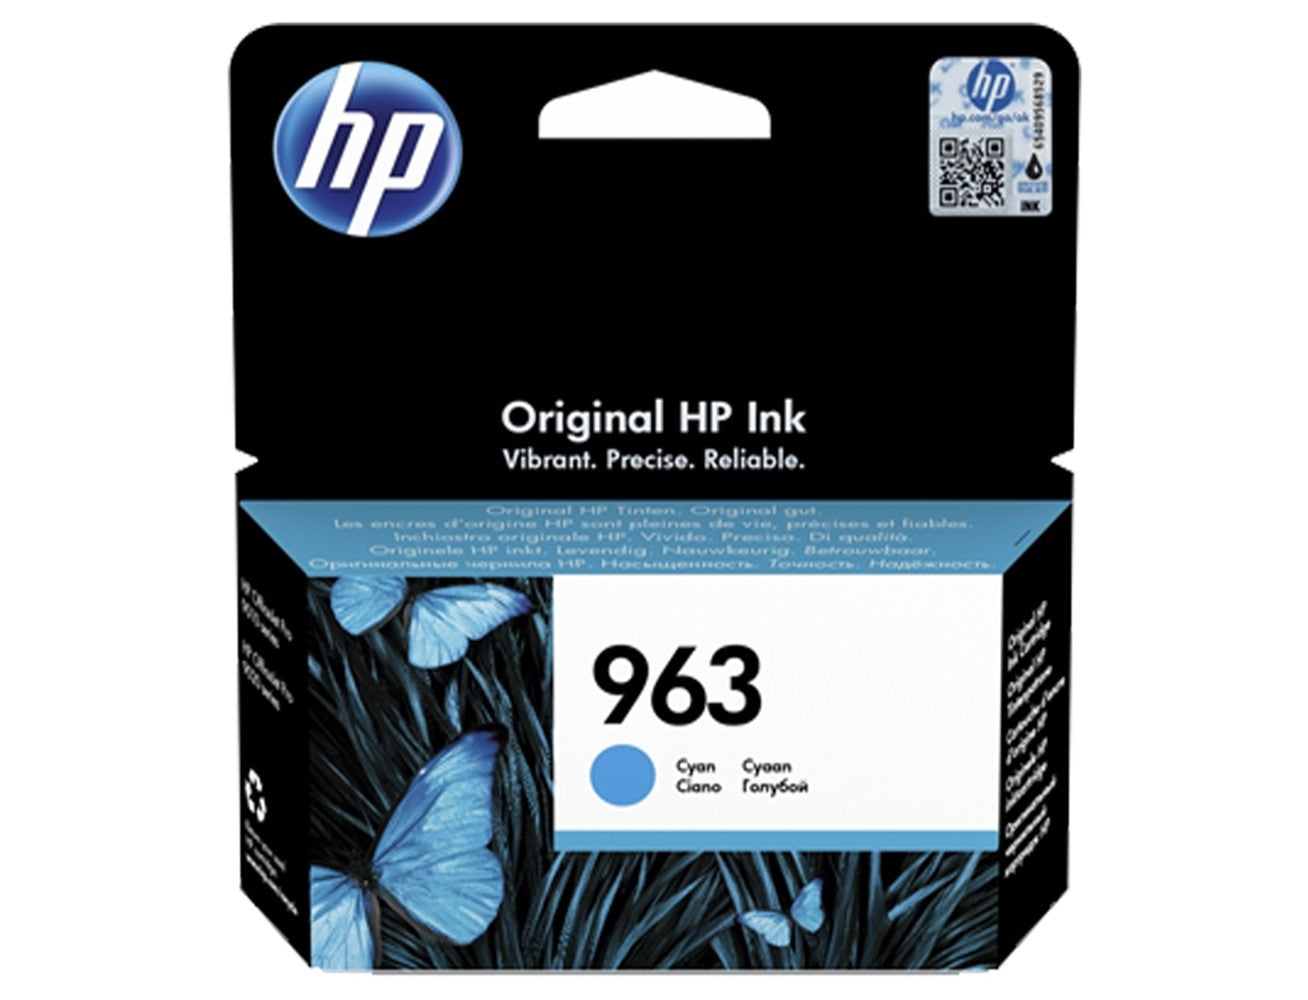 HP 963 Original Ink Cartridge - Cyan